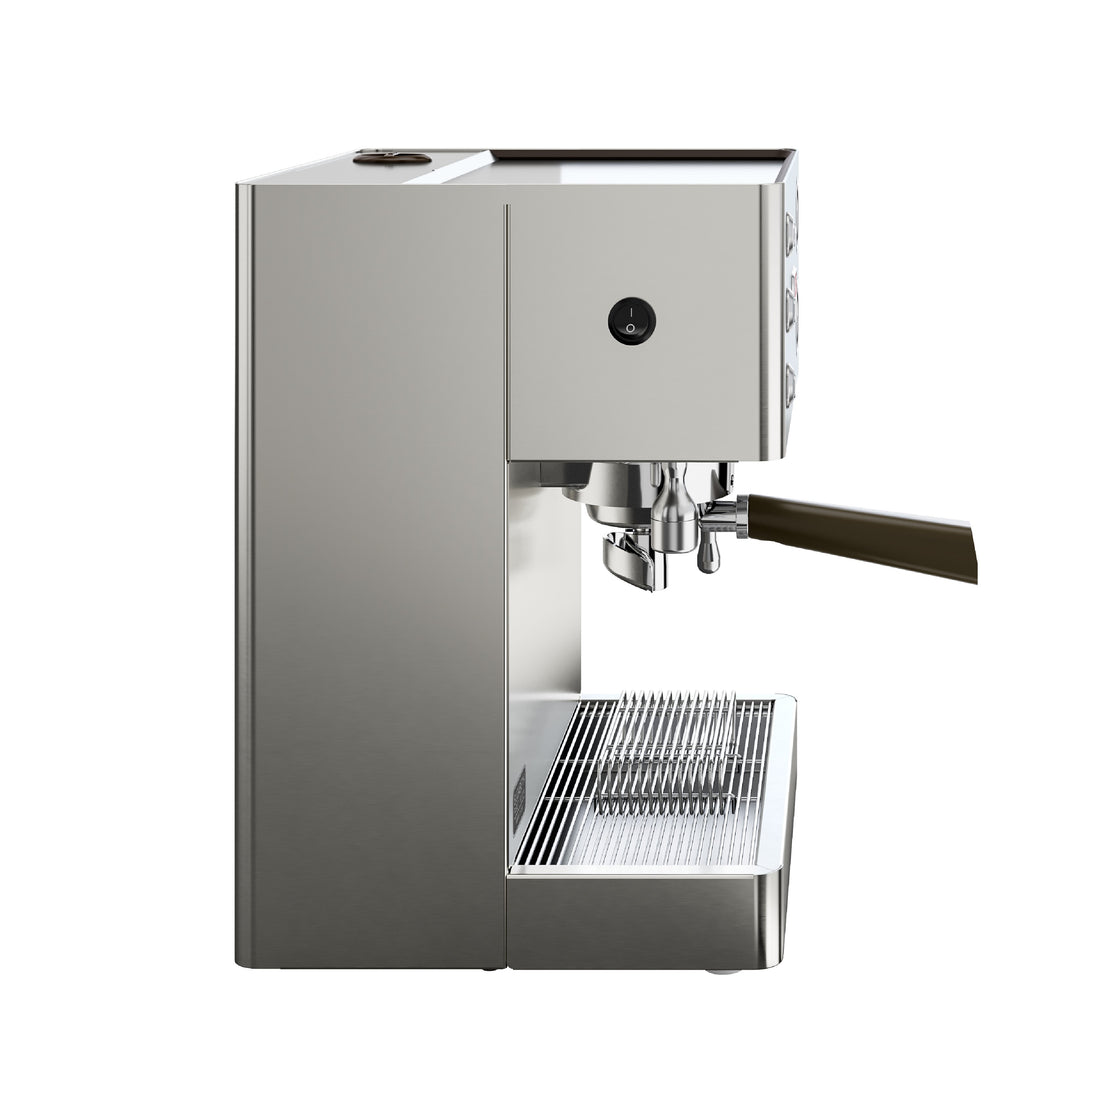 Lelit Elizabeth Dual Boiler Espresso Machine